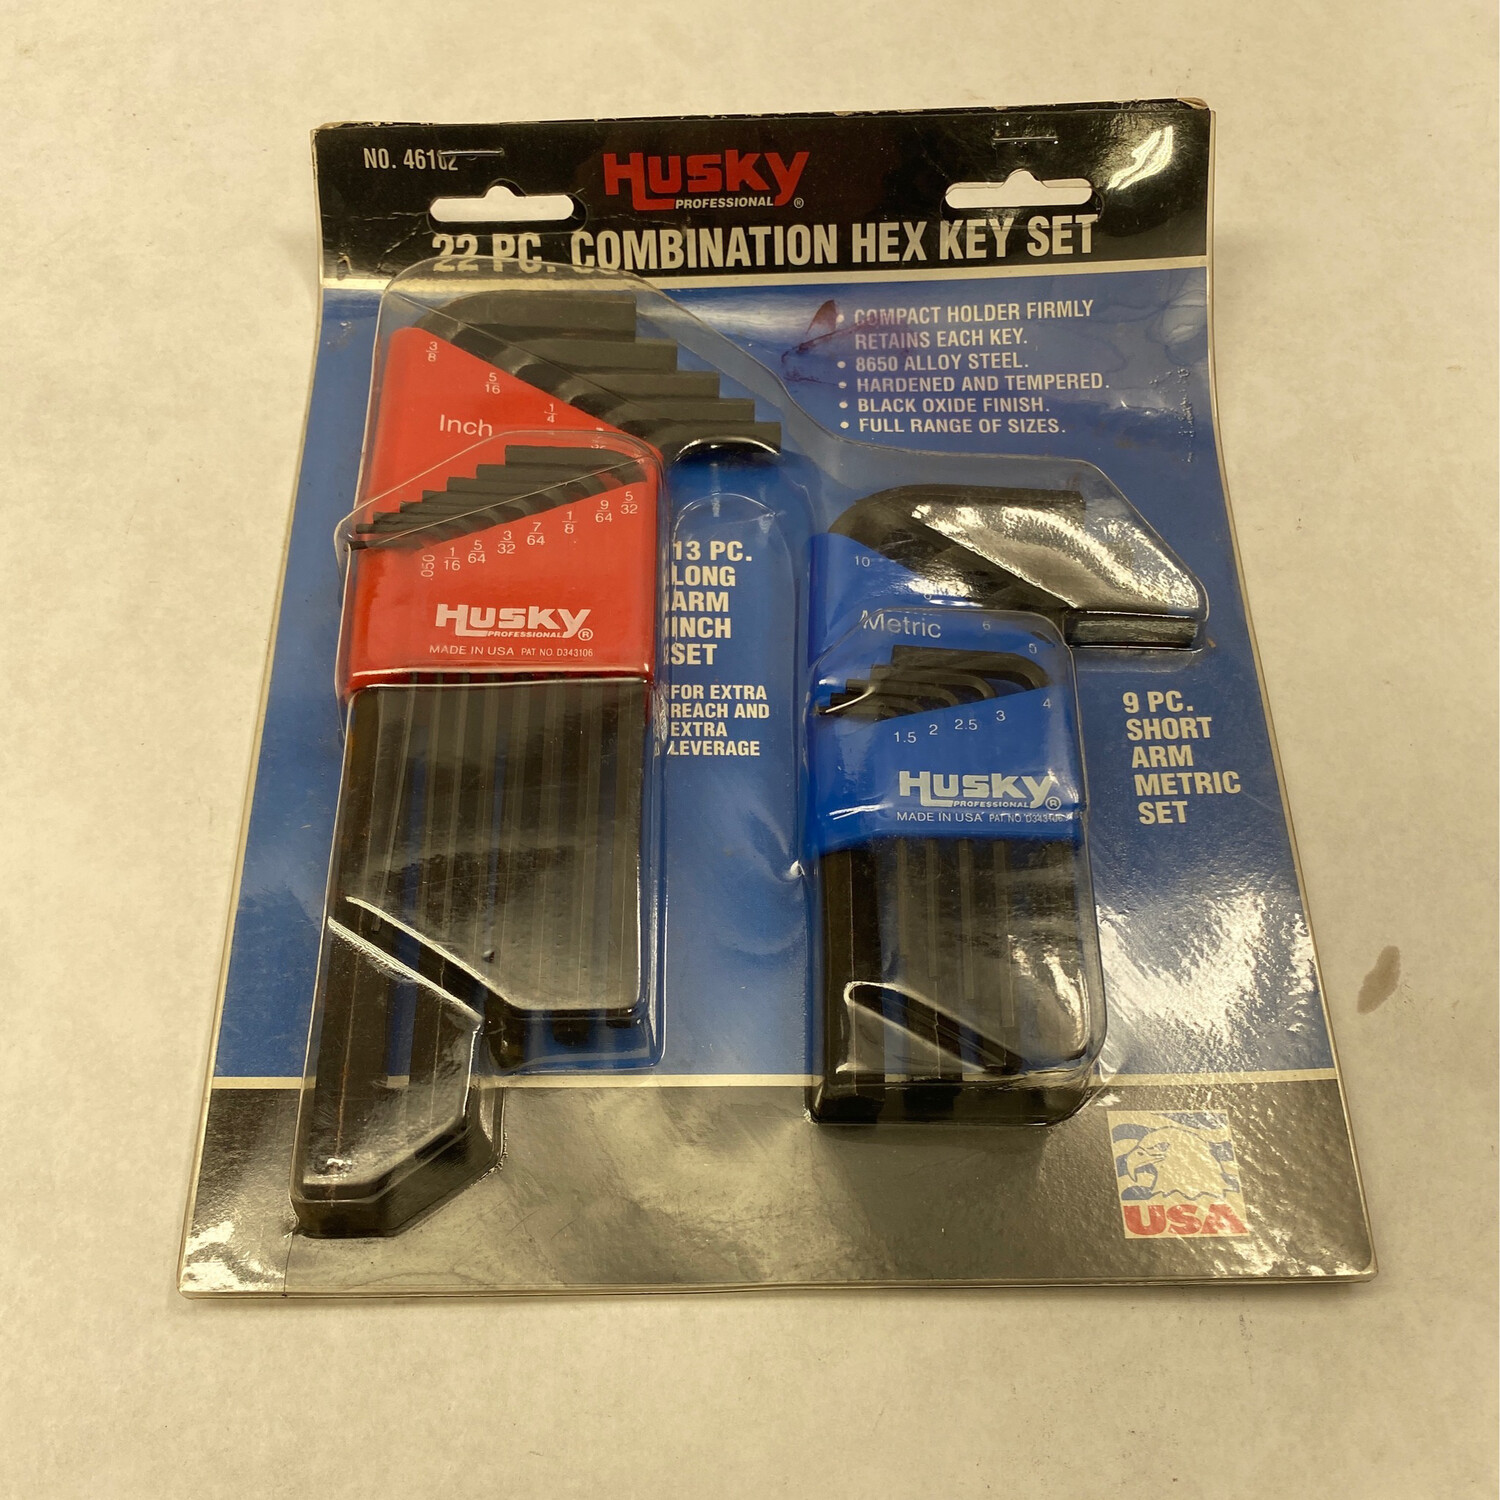 Husky Tools 22pc. Combination Hex Key Set, 46102